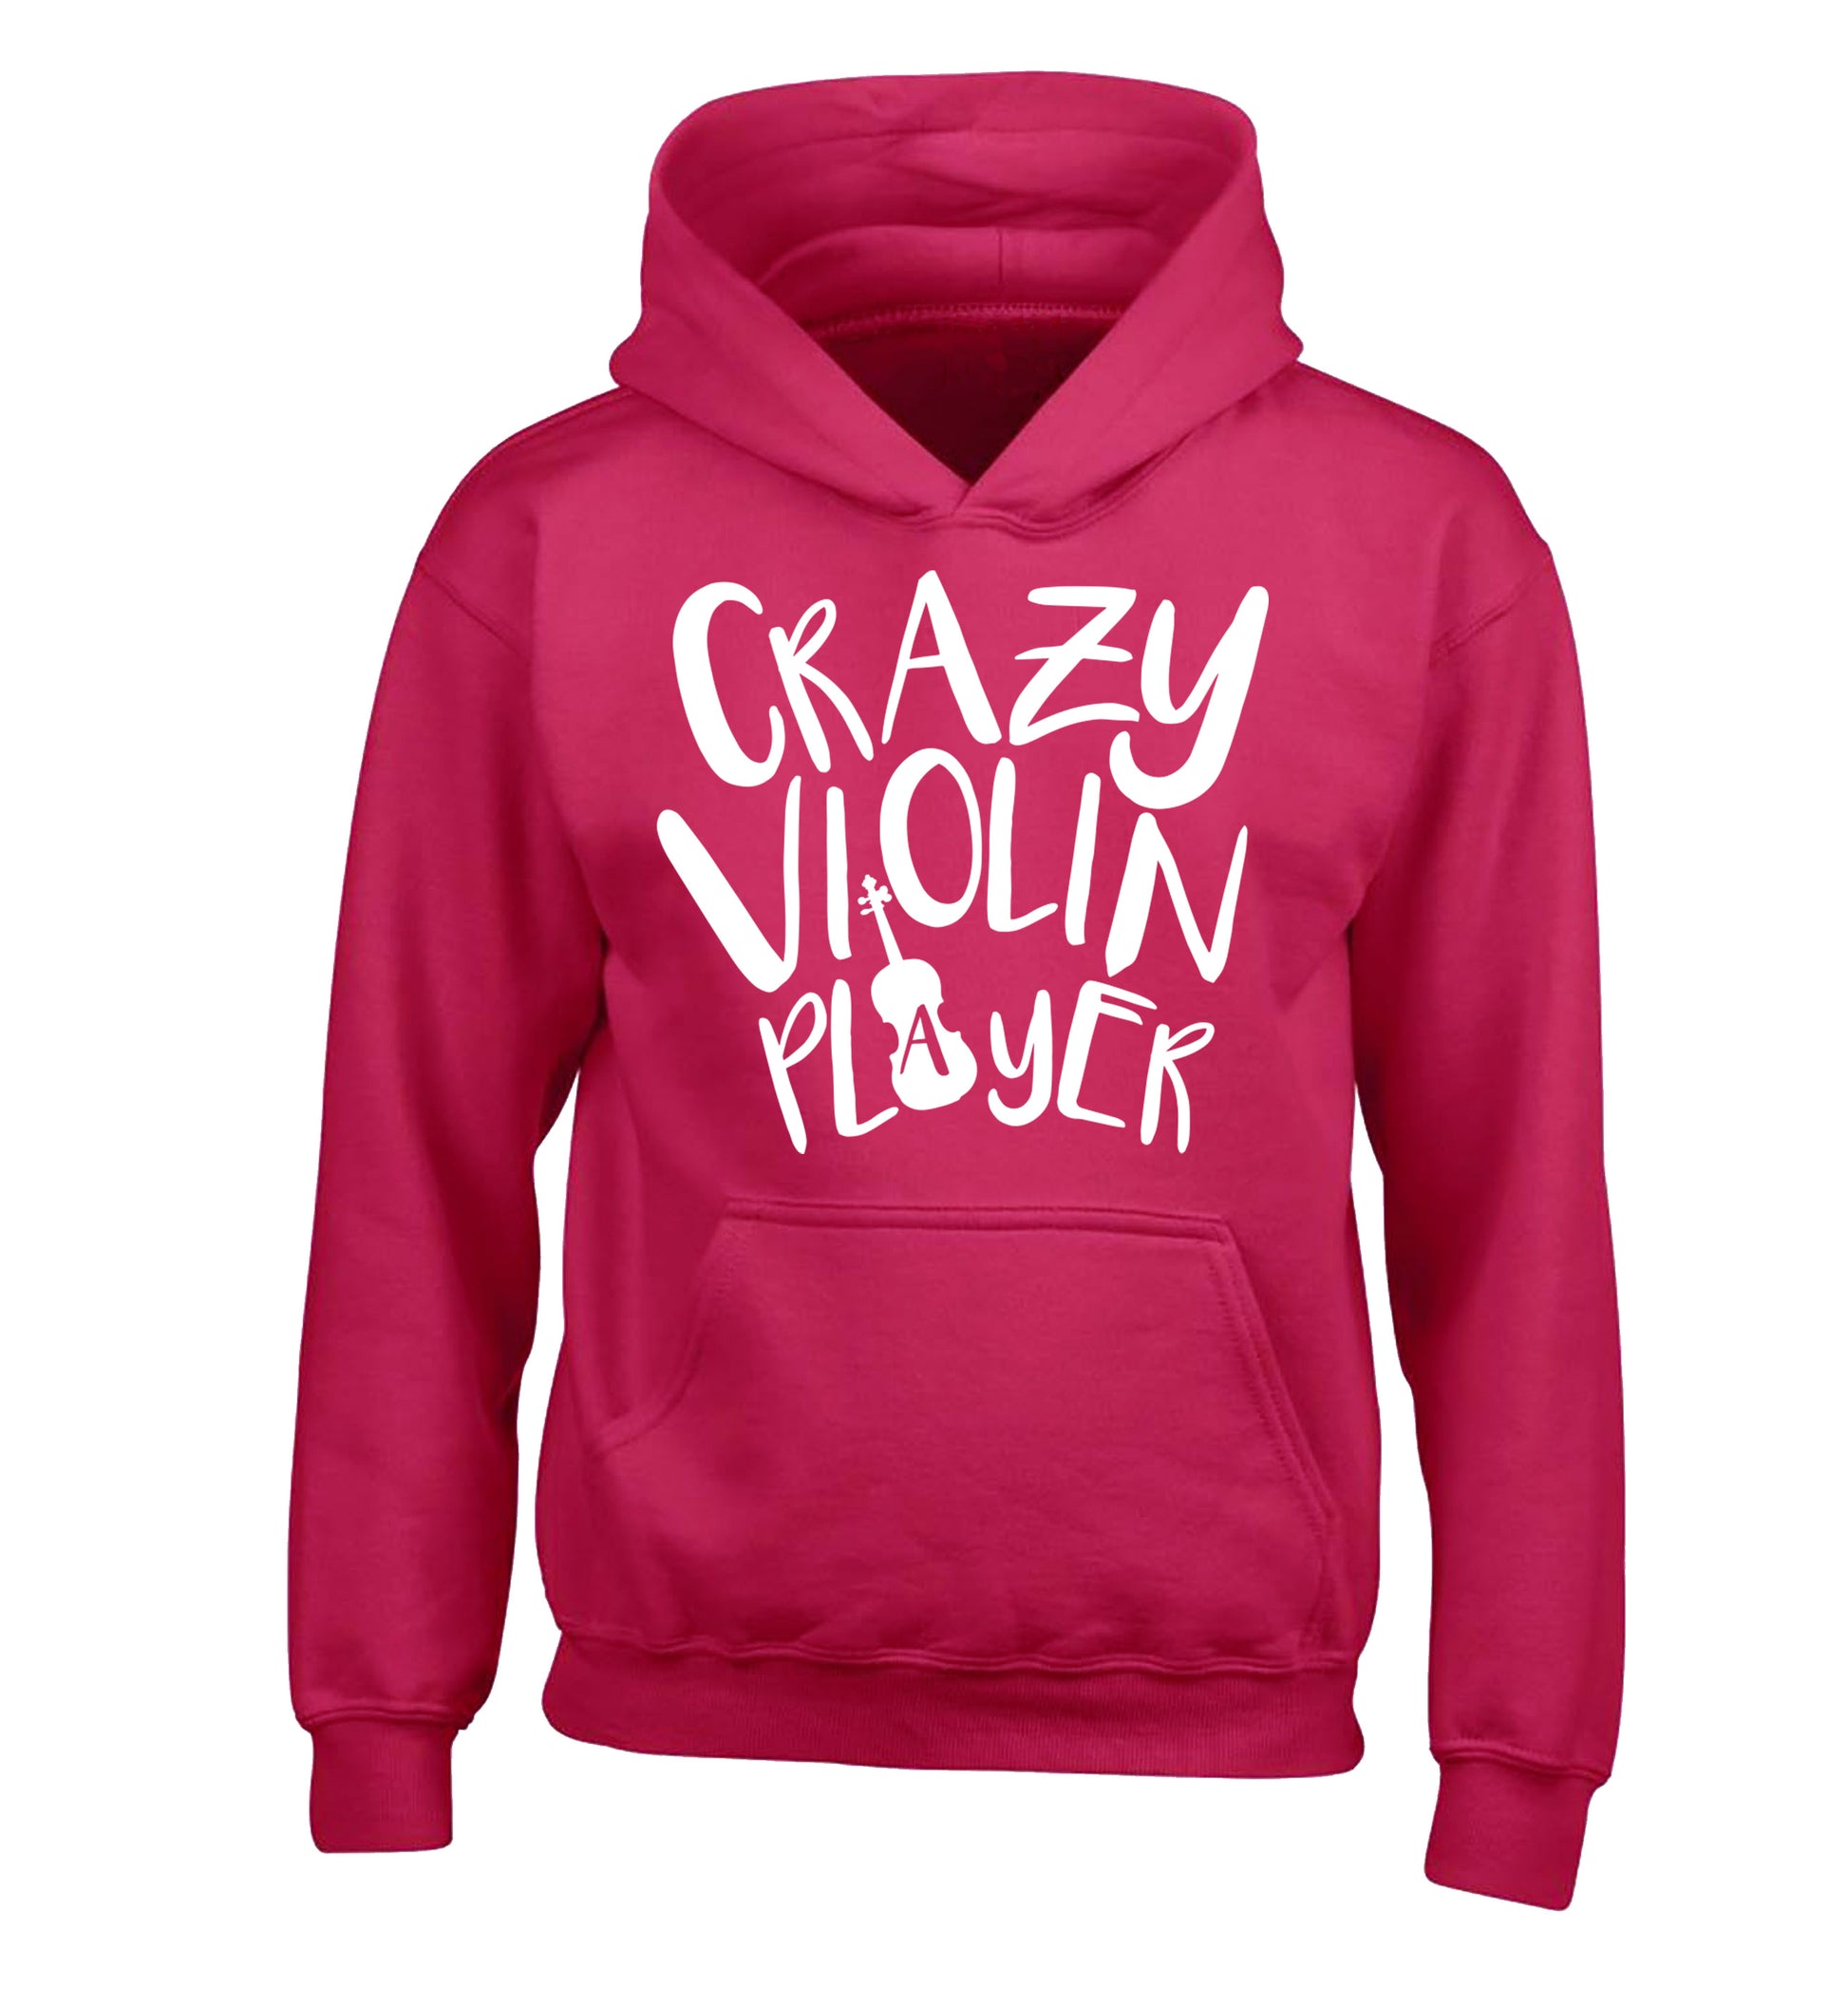 Crazy Violin Player children's pink hoodie 12-13 Years